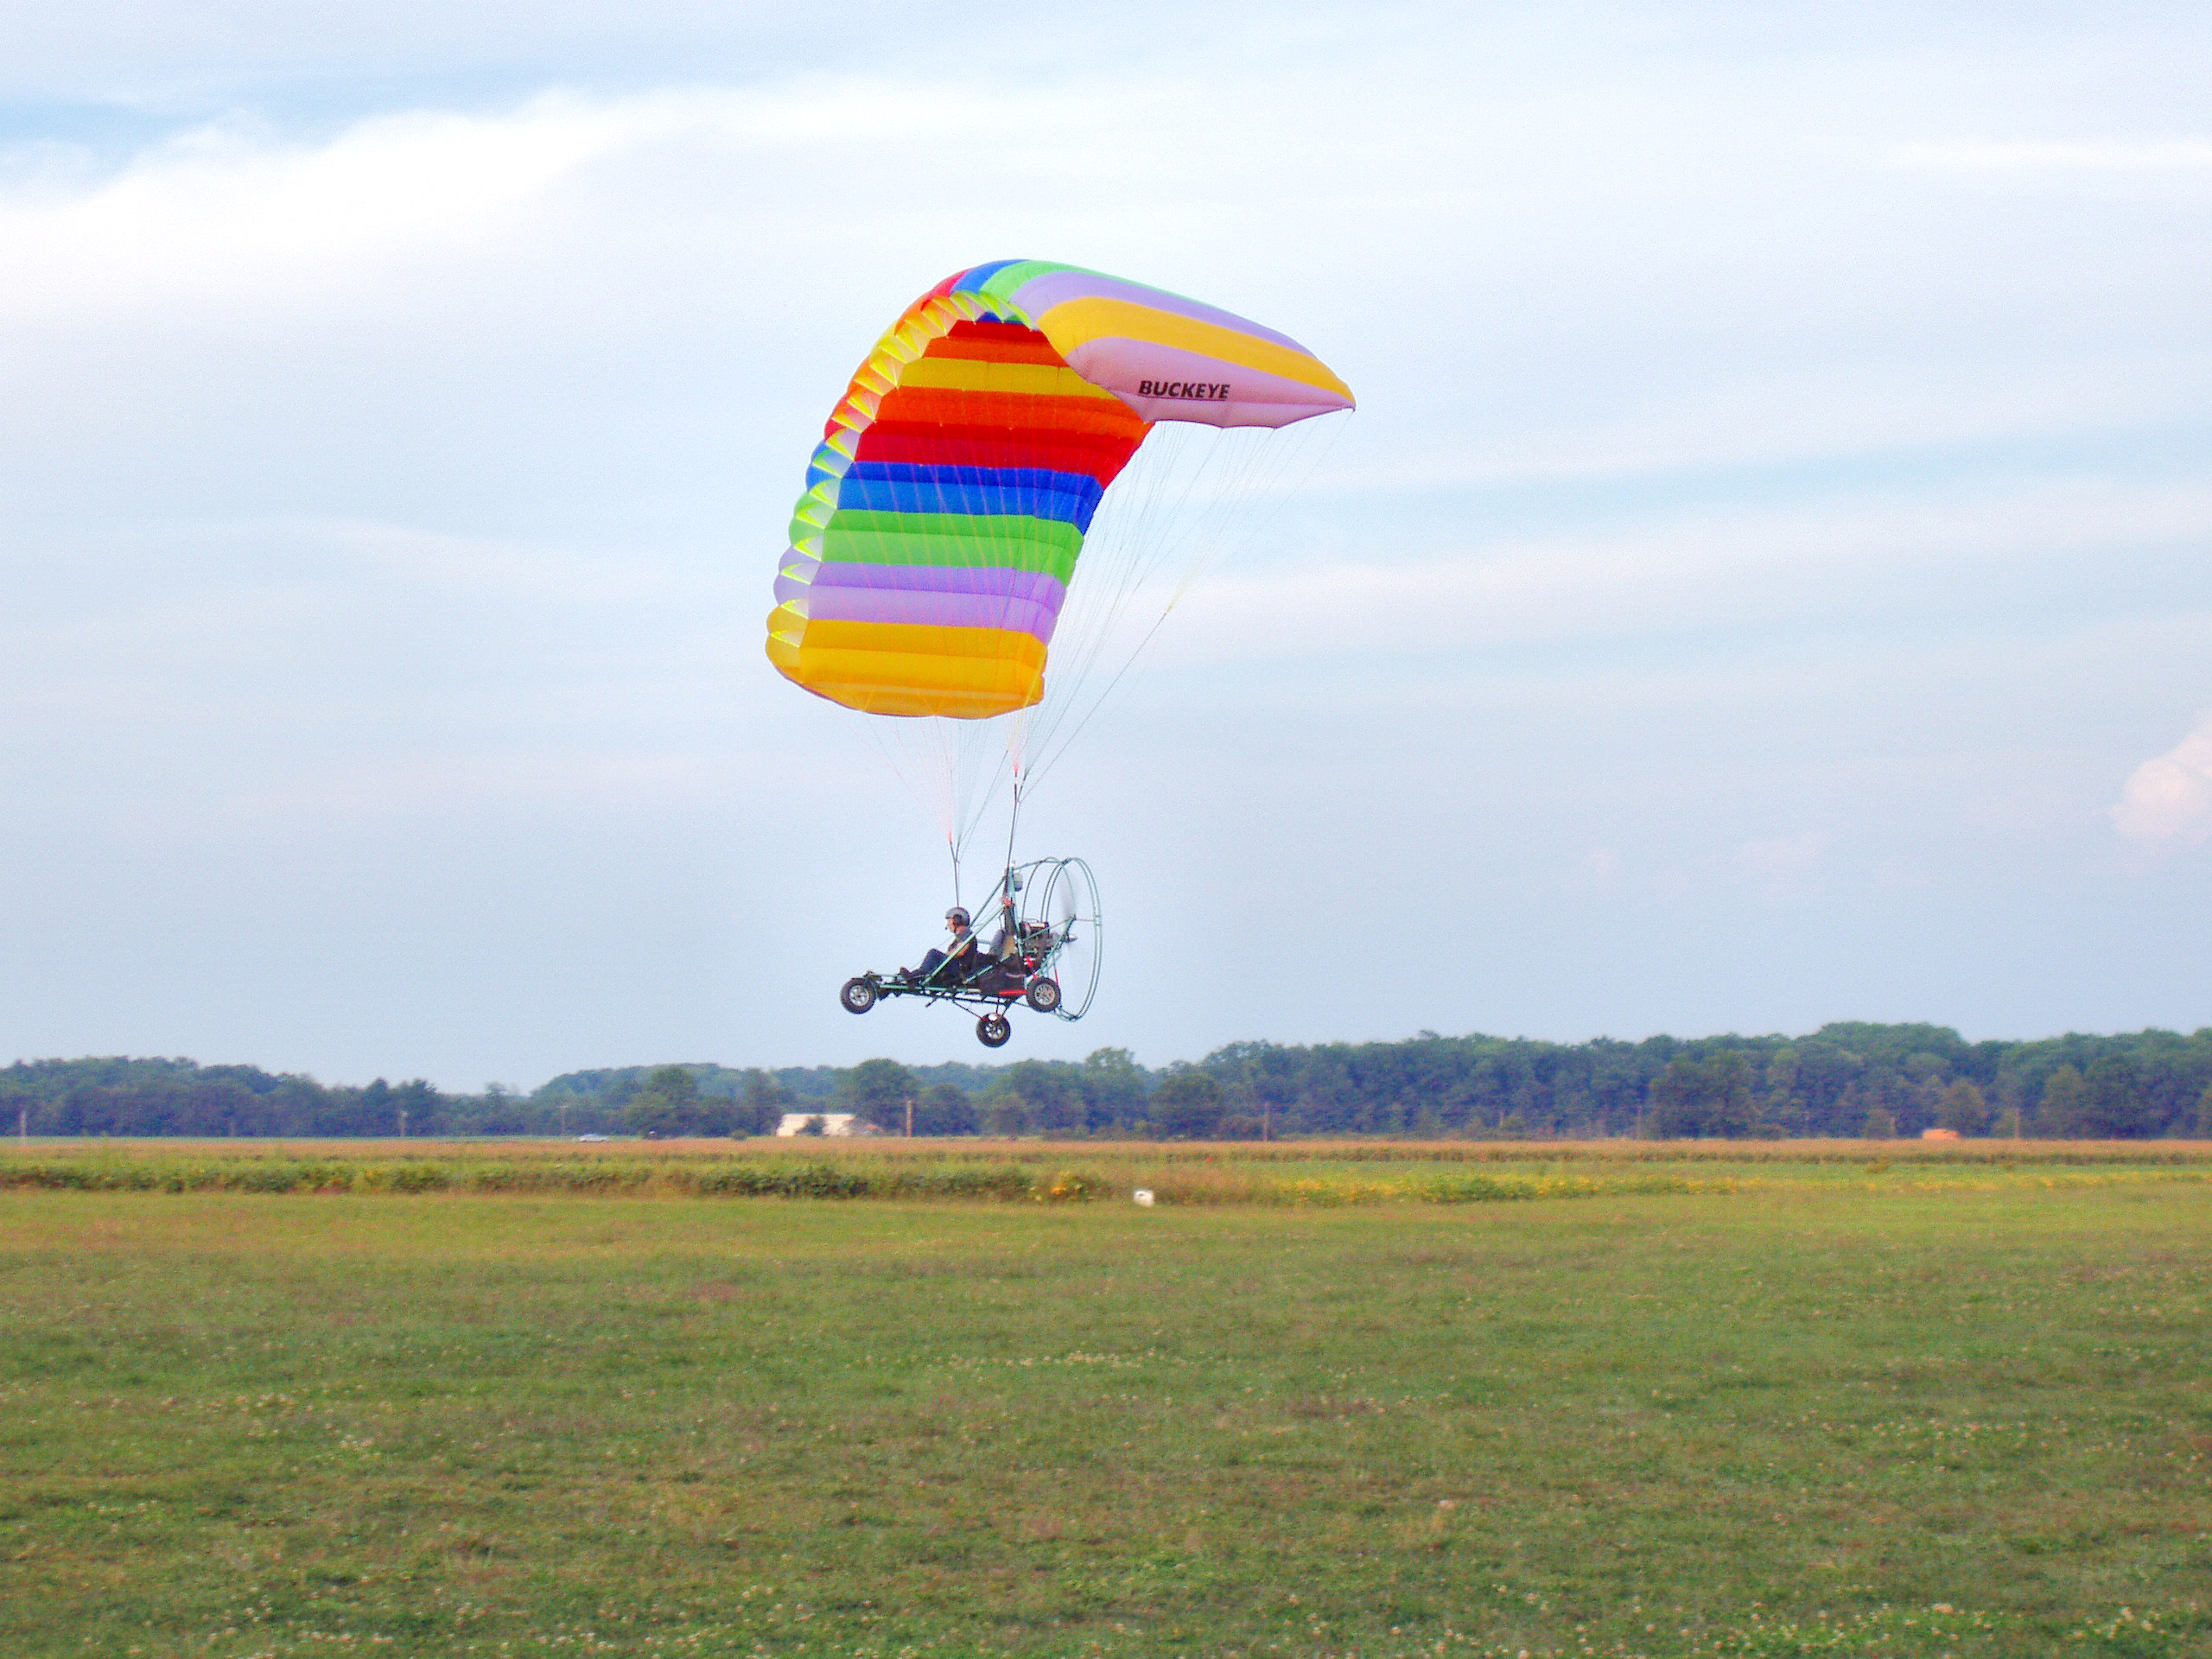 File:Powered-parachute-flying.jpg - Wikimedia Commons